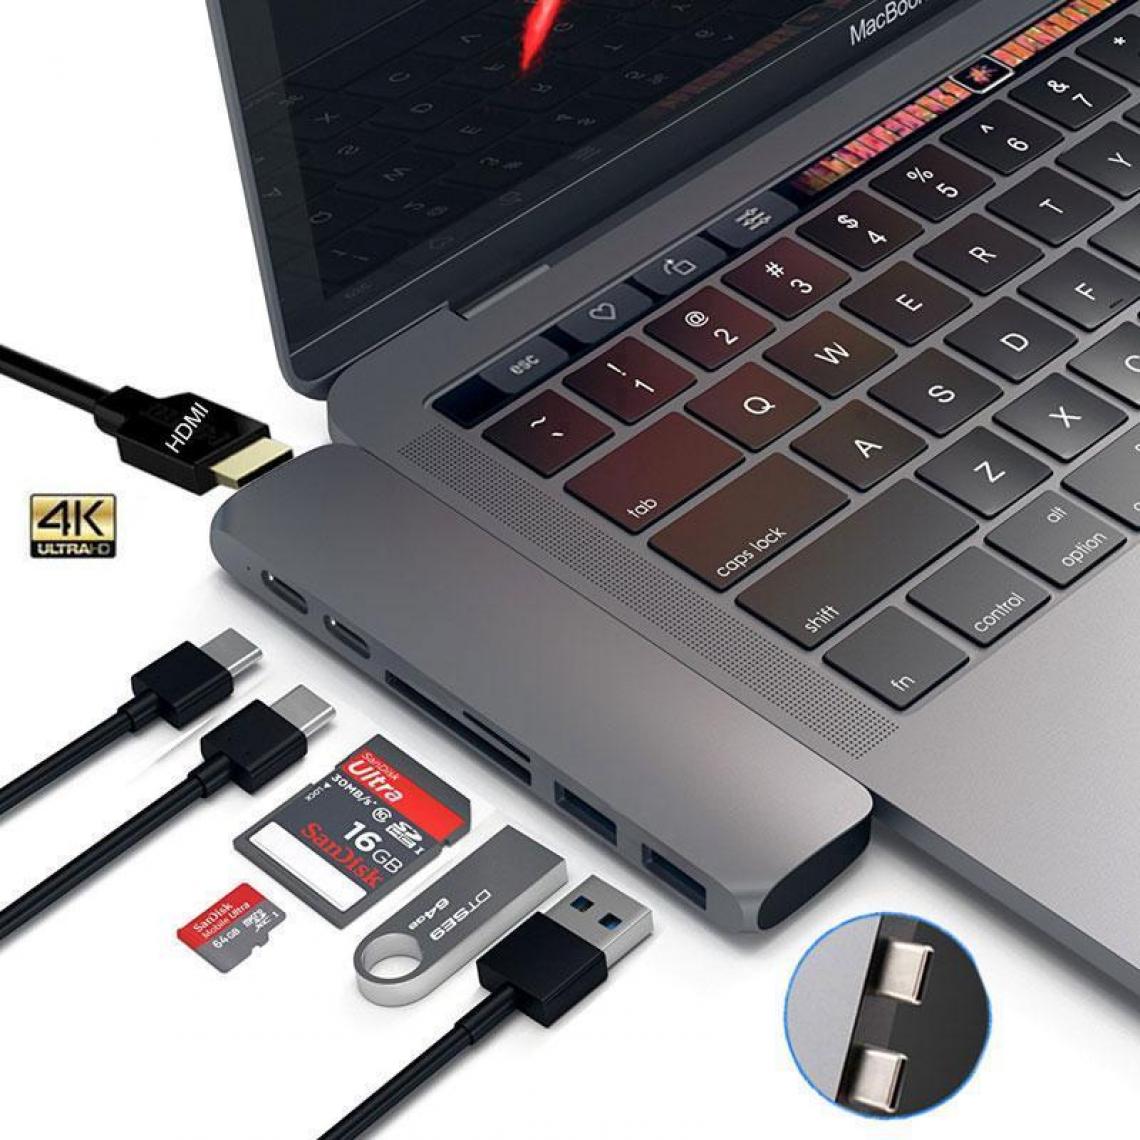 Justgreenbox - Adaptateur Hub USB Type-C 4K Thunderbolt 3.1 vers HDMI pour MacBook Pro/Air, sans câble - Hub